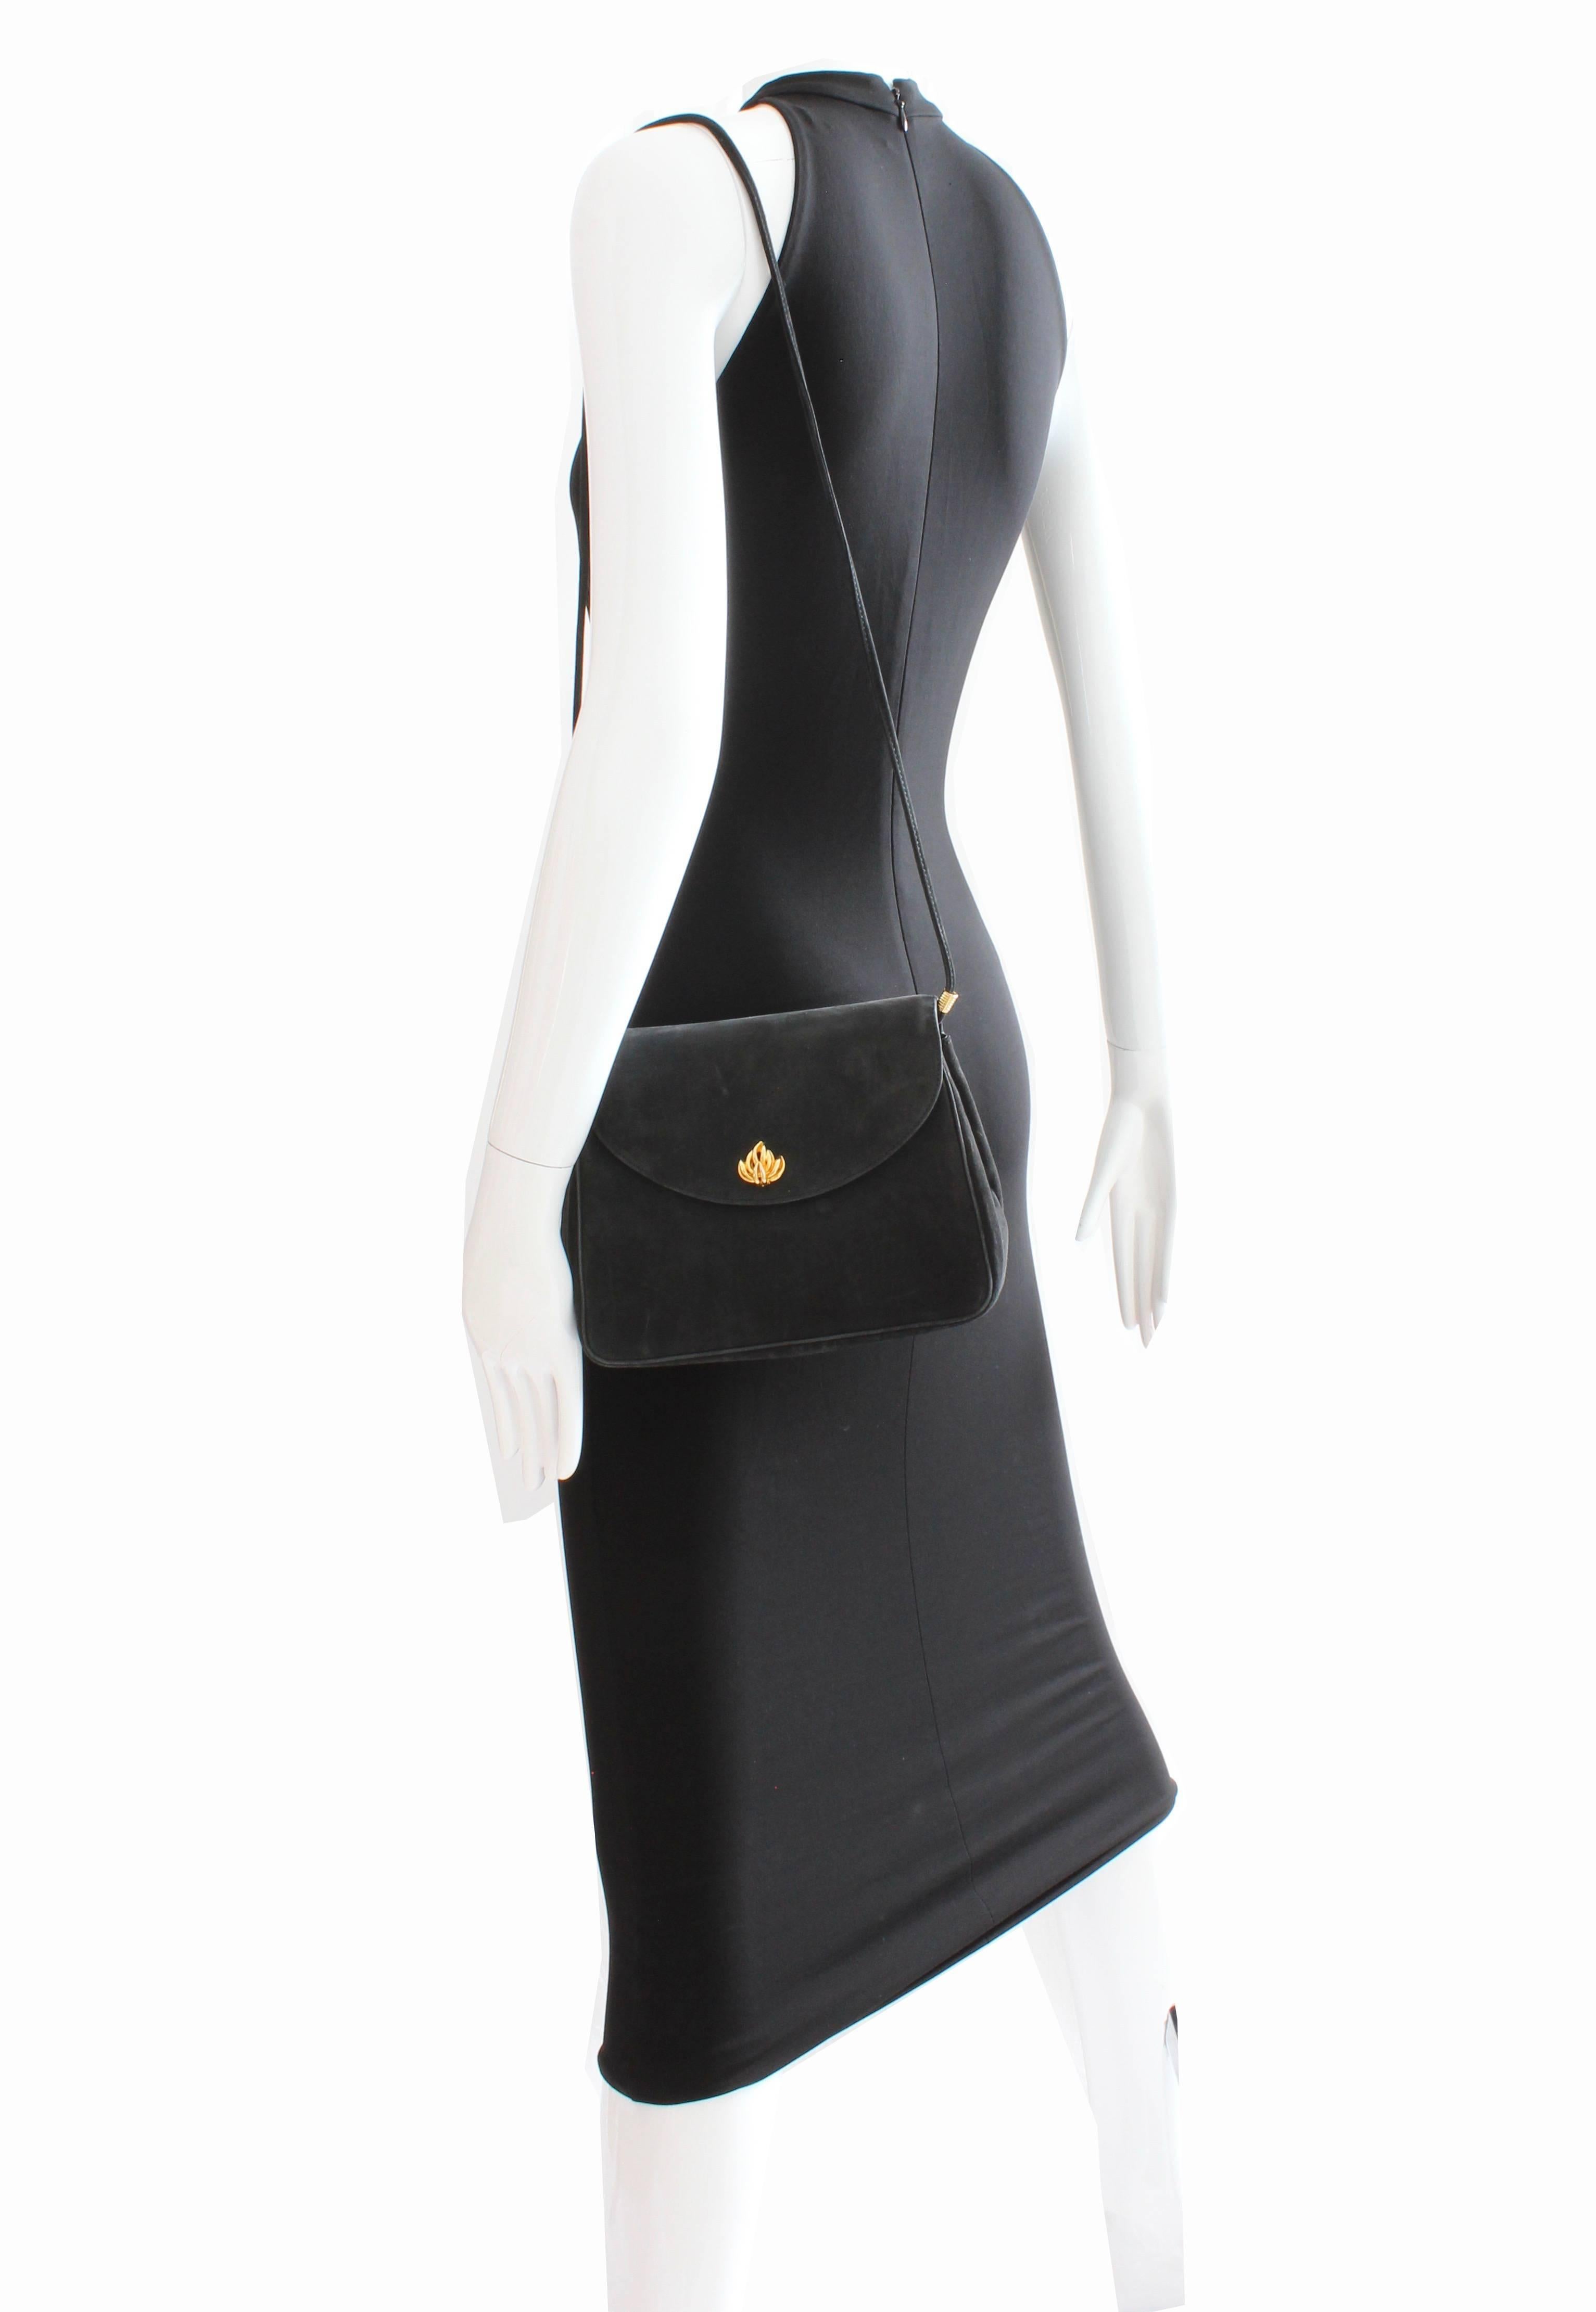 Vintage Asprey London Shoulder Bag Convertible Clutch Black Suede Leather 70s 2